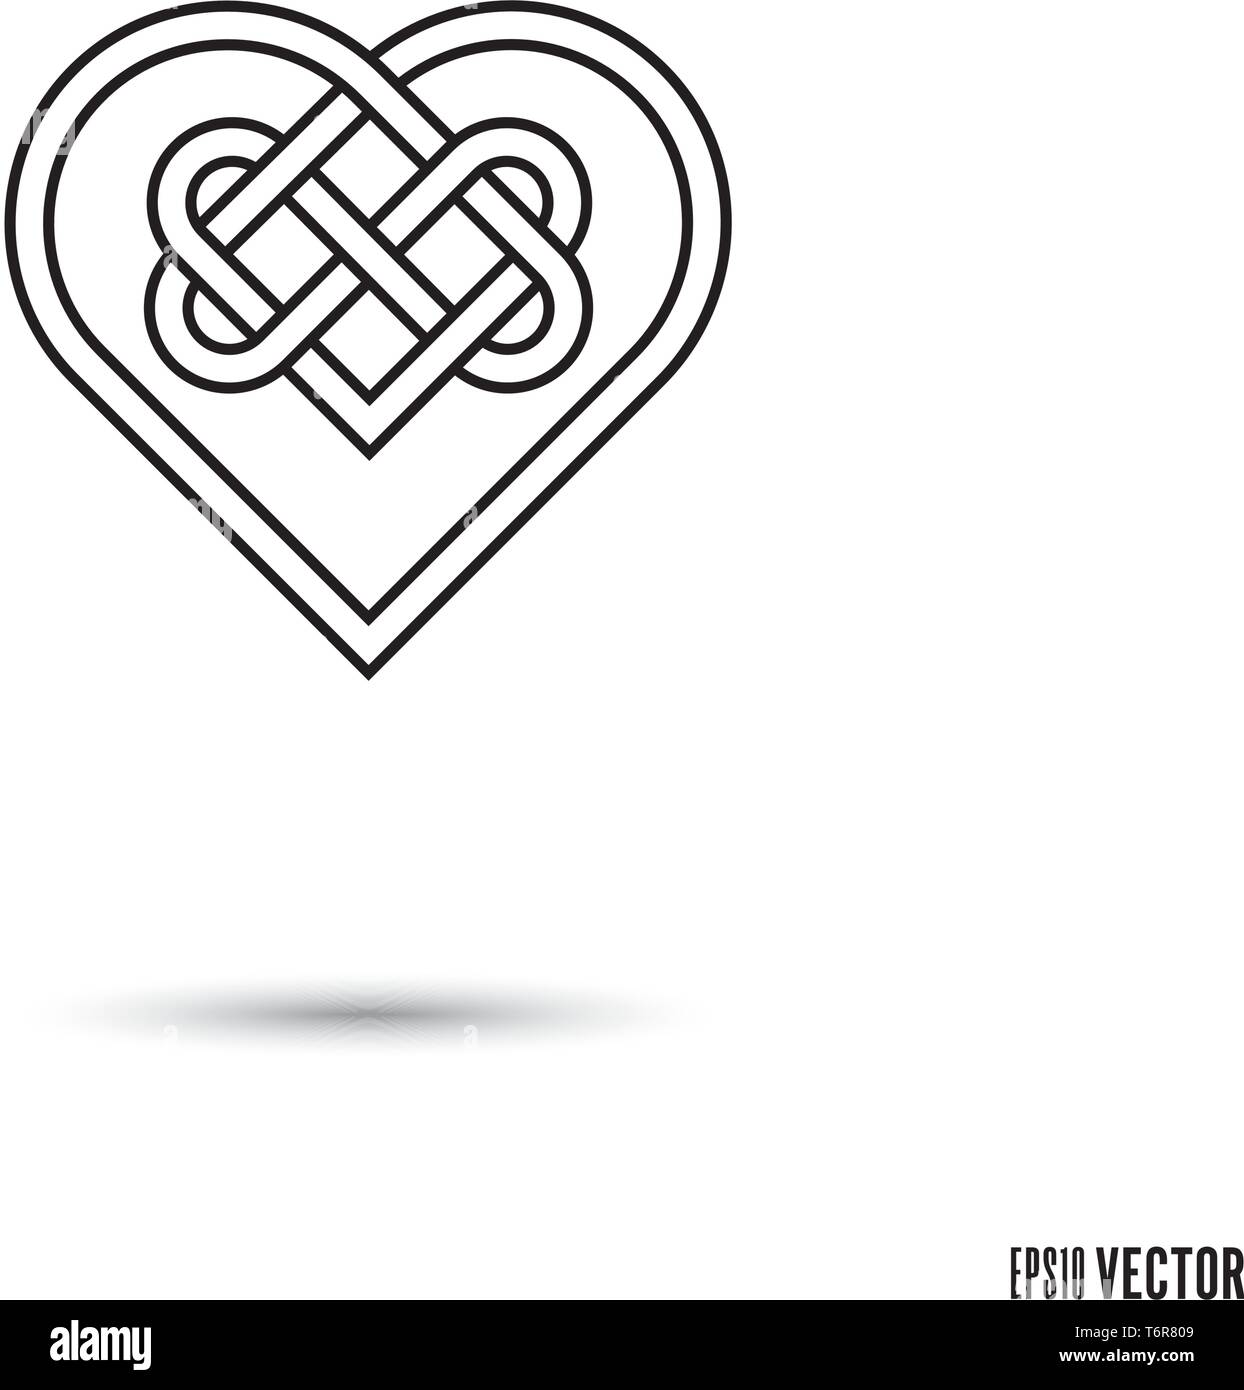 Celtic Lovers Knot, verflochten Herzförmige unendliche Schleife struktursymbol Vector Illustration Stock Vektor